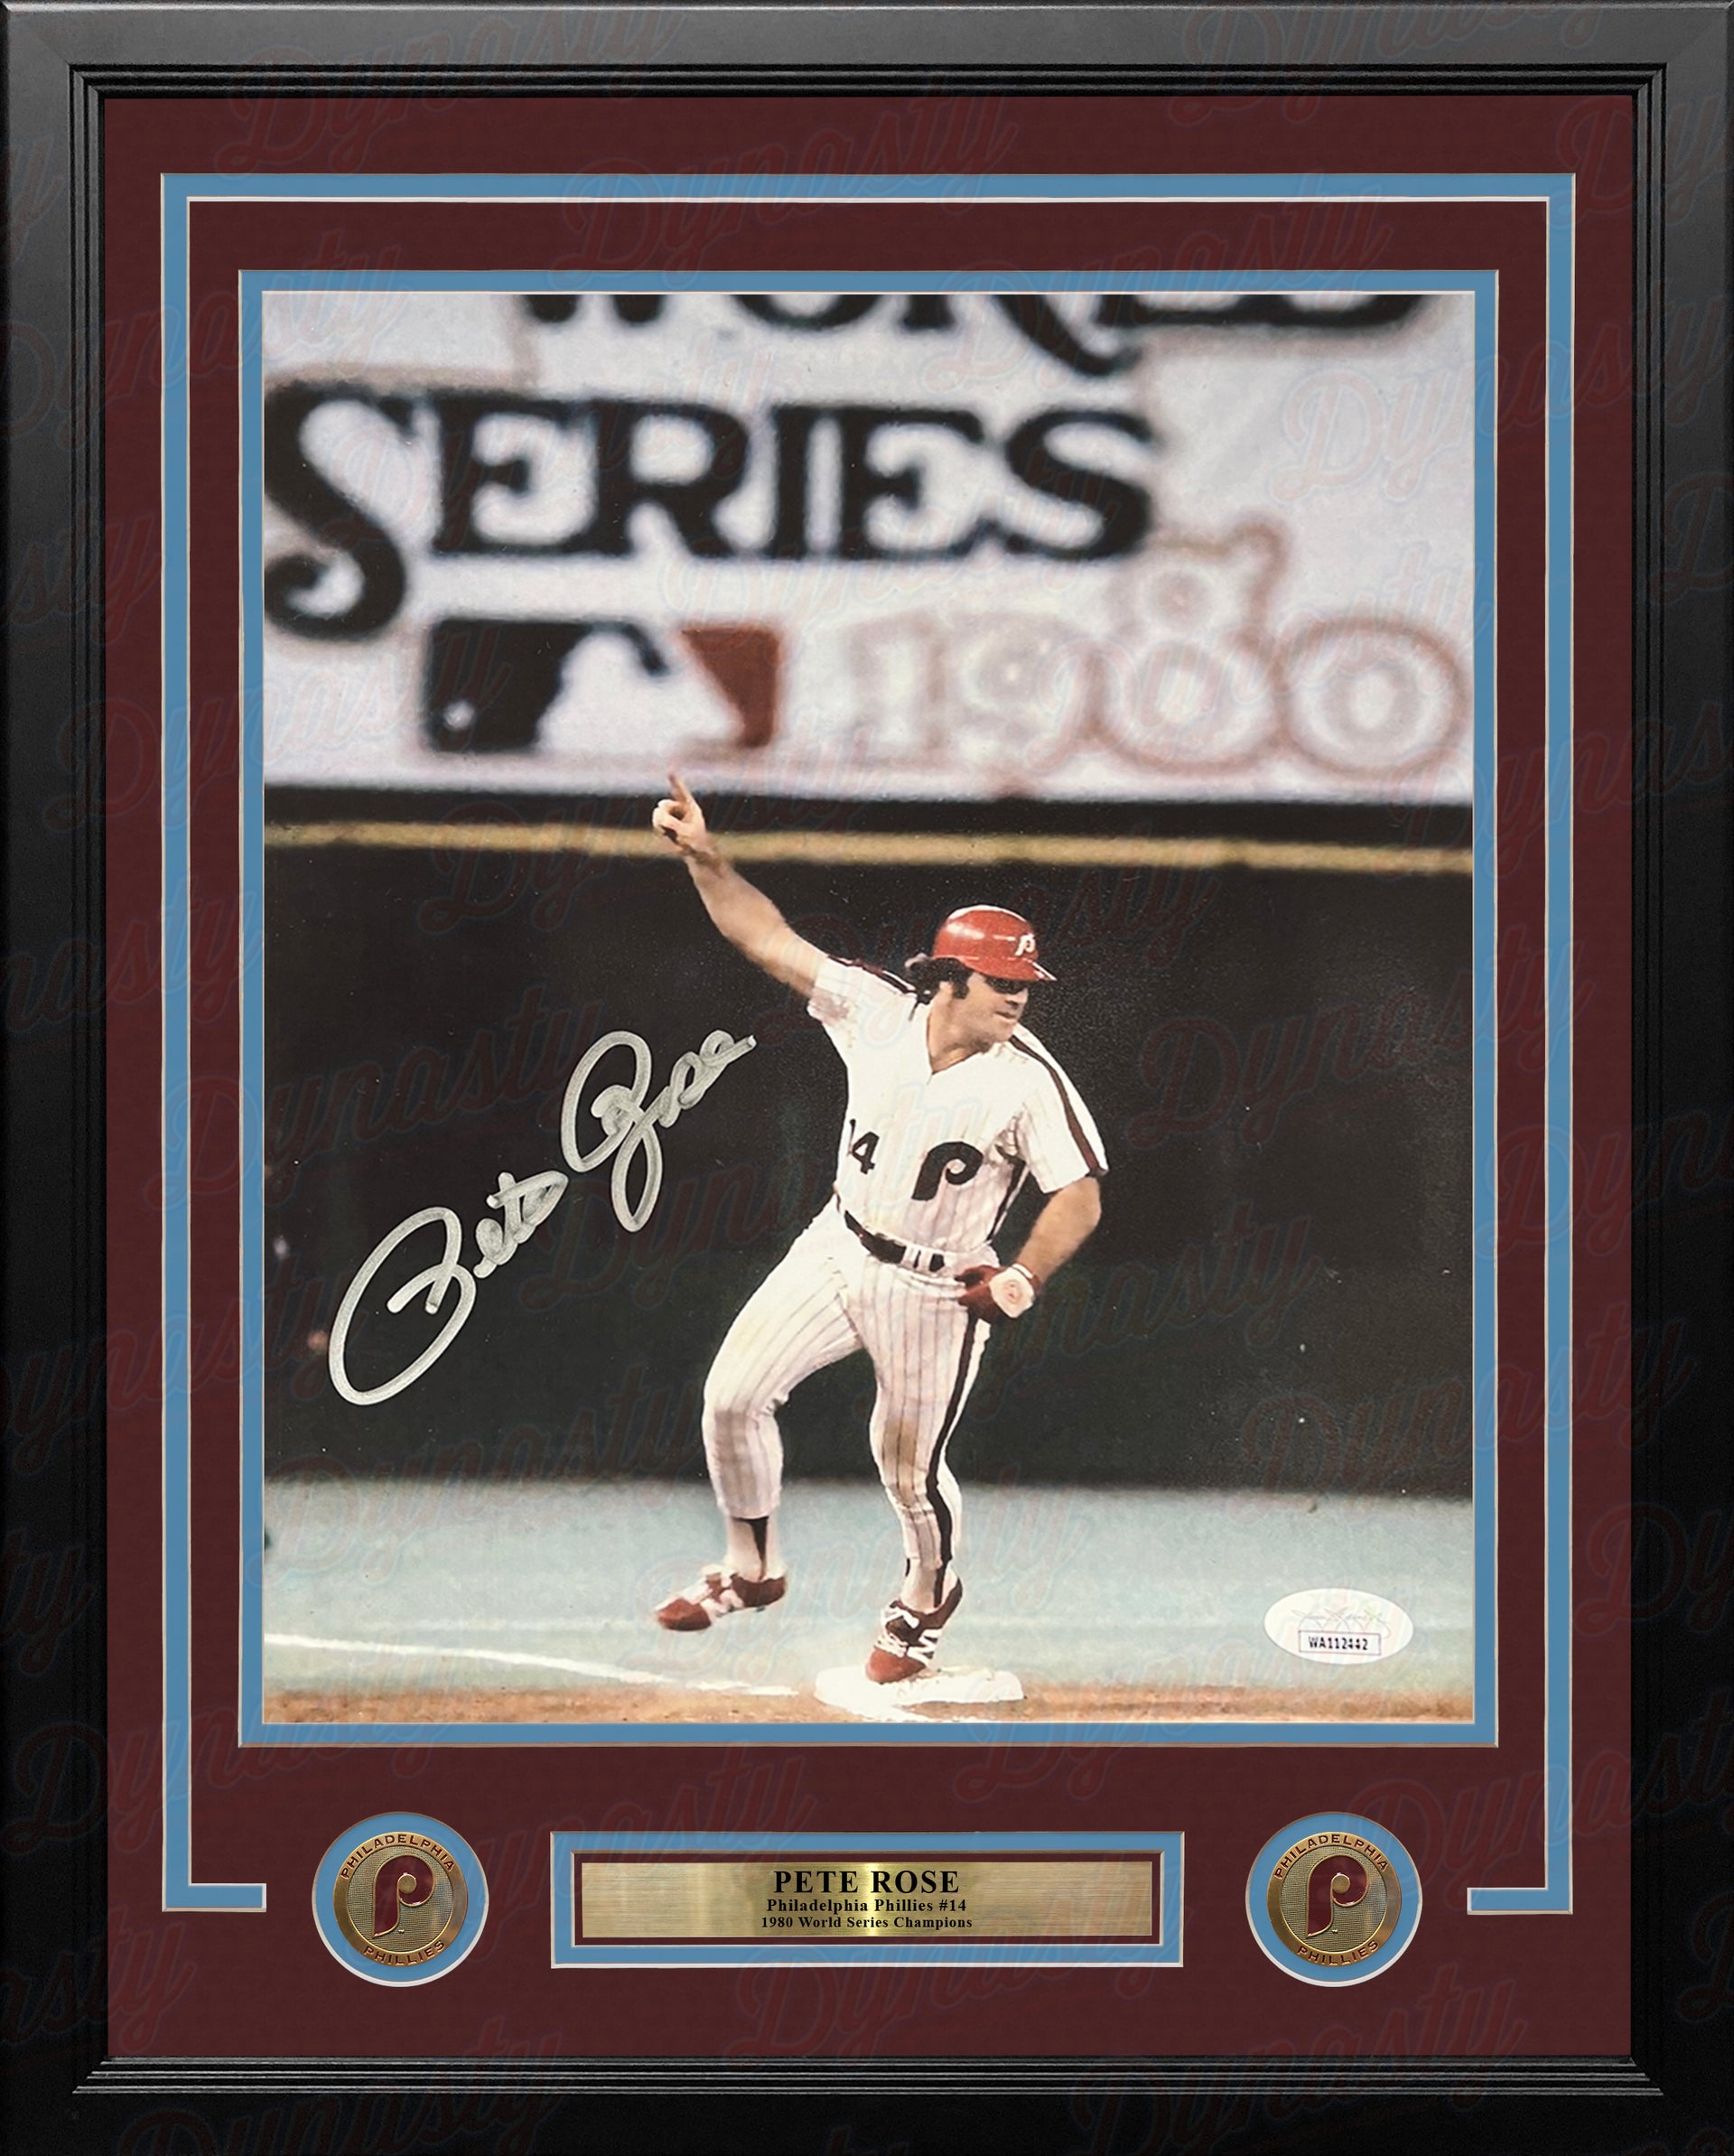 Pete Rose 1980 World Series Philadelphia Phillies Autographed Framed Baseball Photo - Dynasty Sports & Framing 